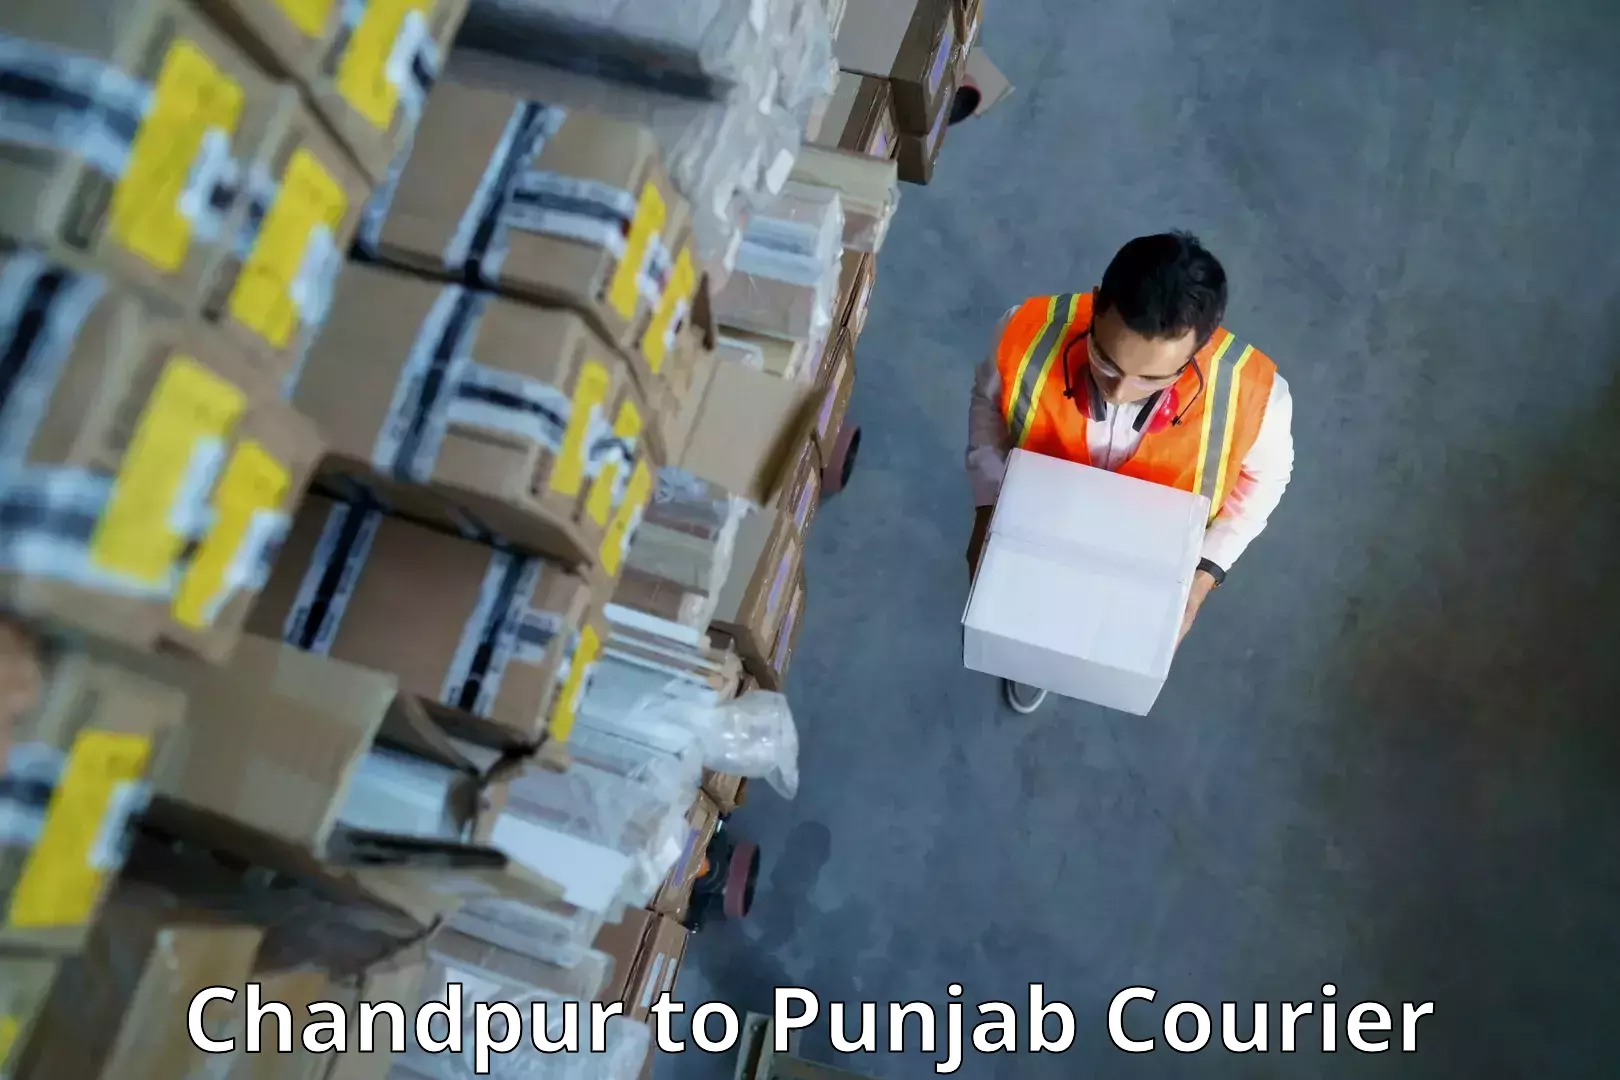 Logistics service provider Chandpur to Punjab